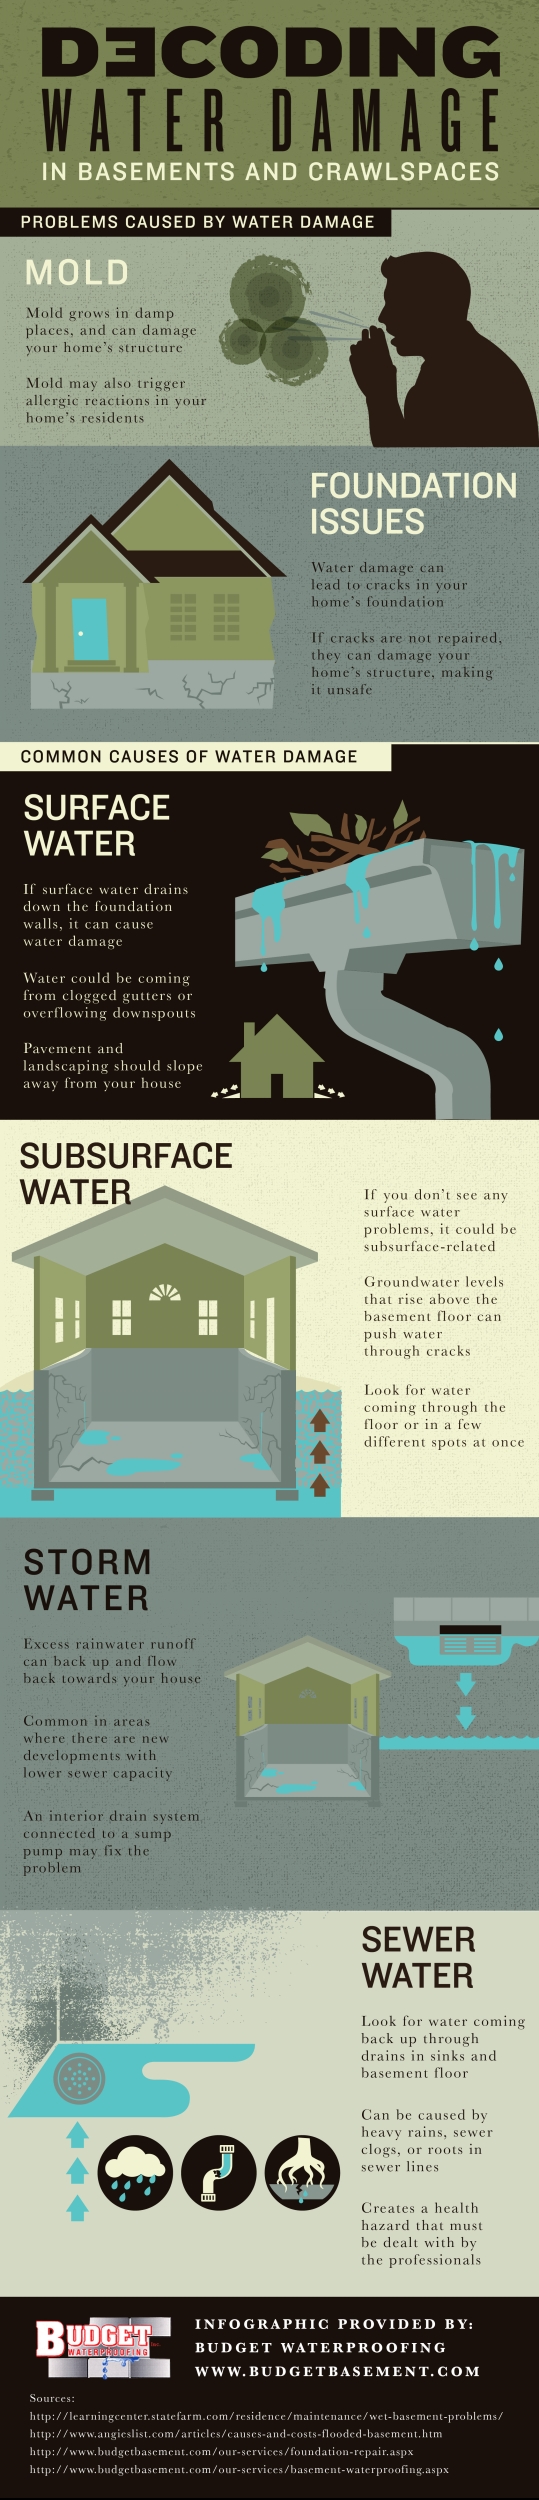 Decoding Water Damage Infographic